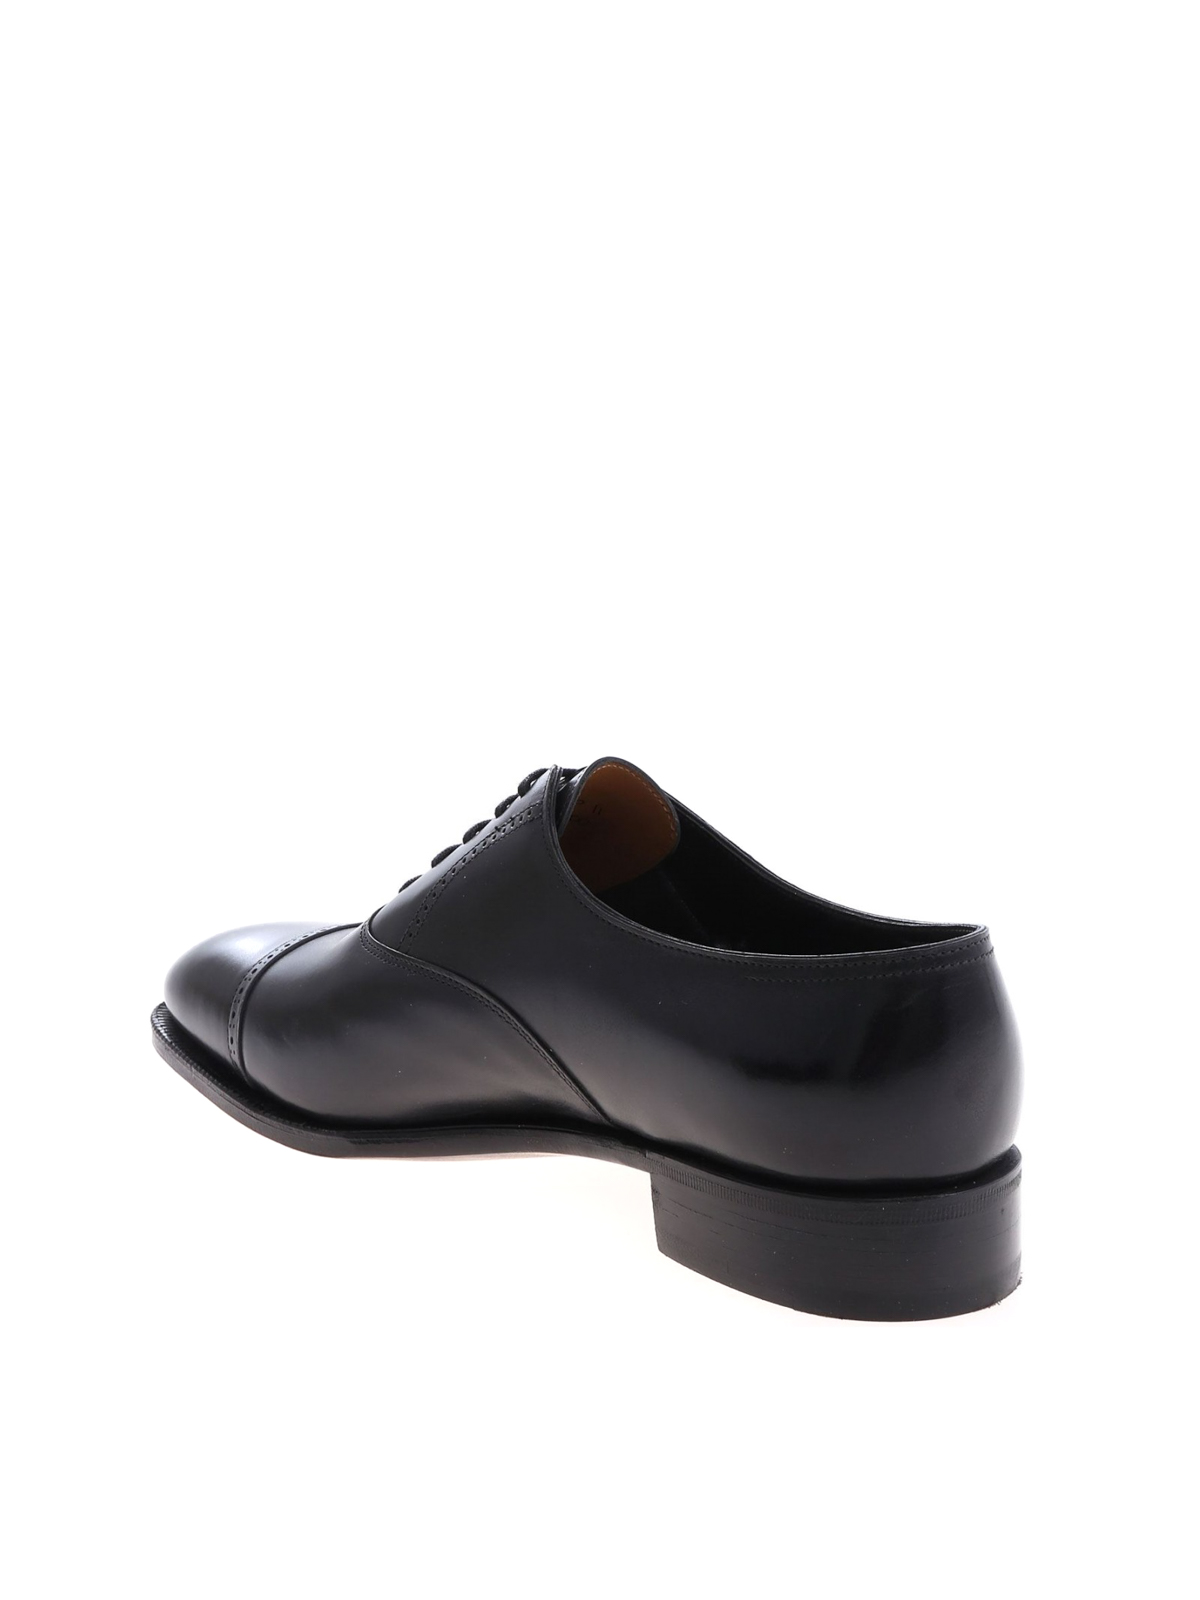 John Lobb - Philip II Oxford shoes - classic shoes - PHILIPIIOXFORDE1R